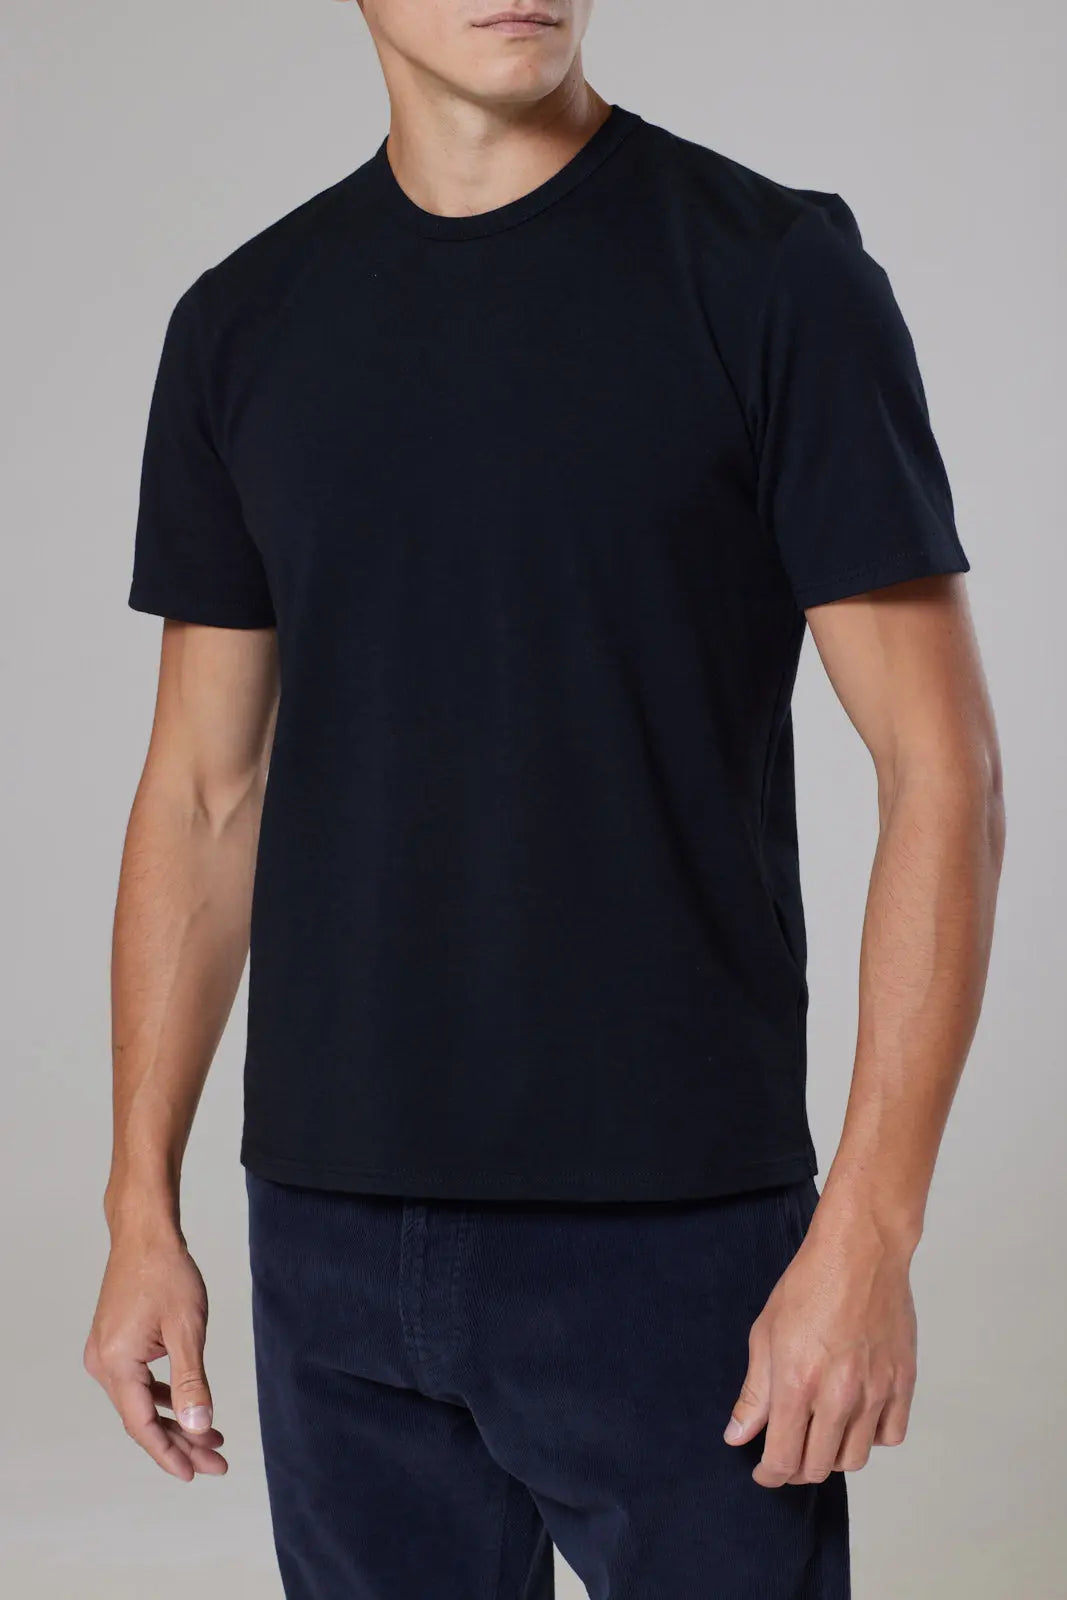 Trueman Short Sleeve Tee Shirt - Black